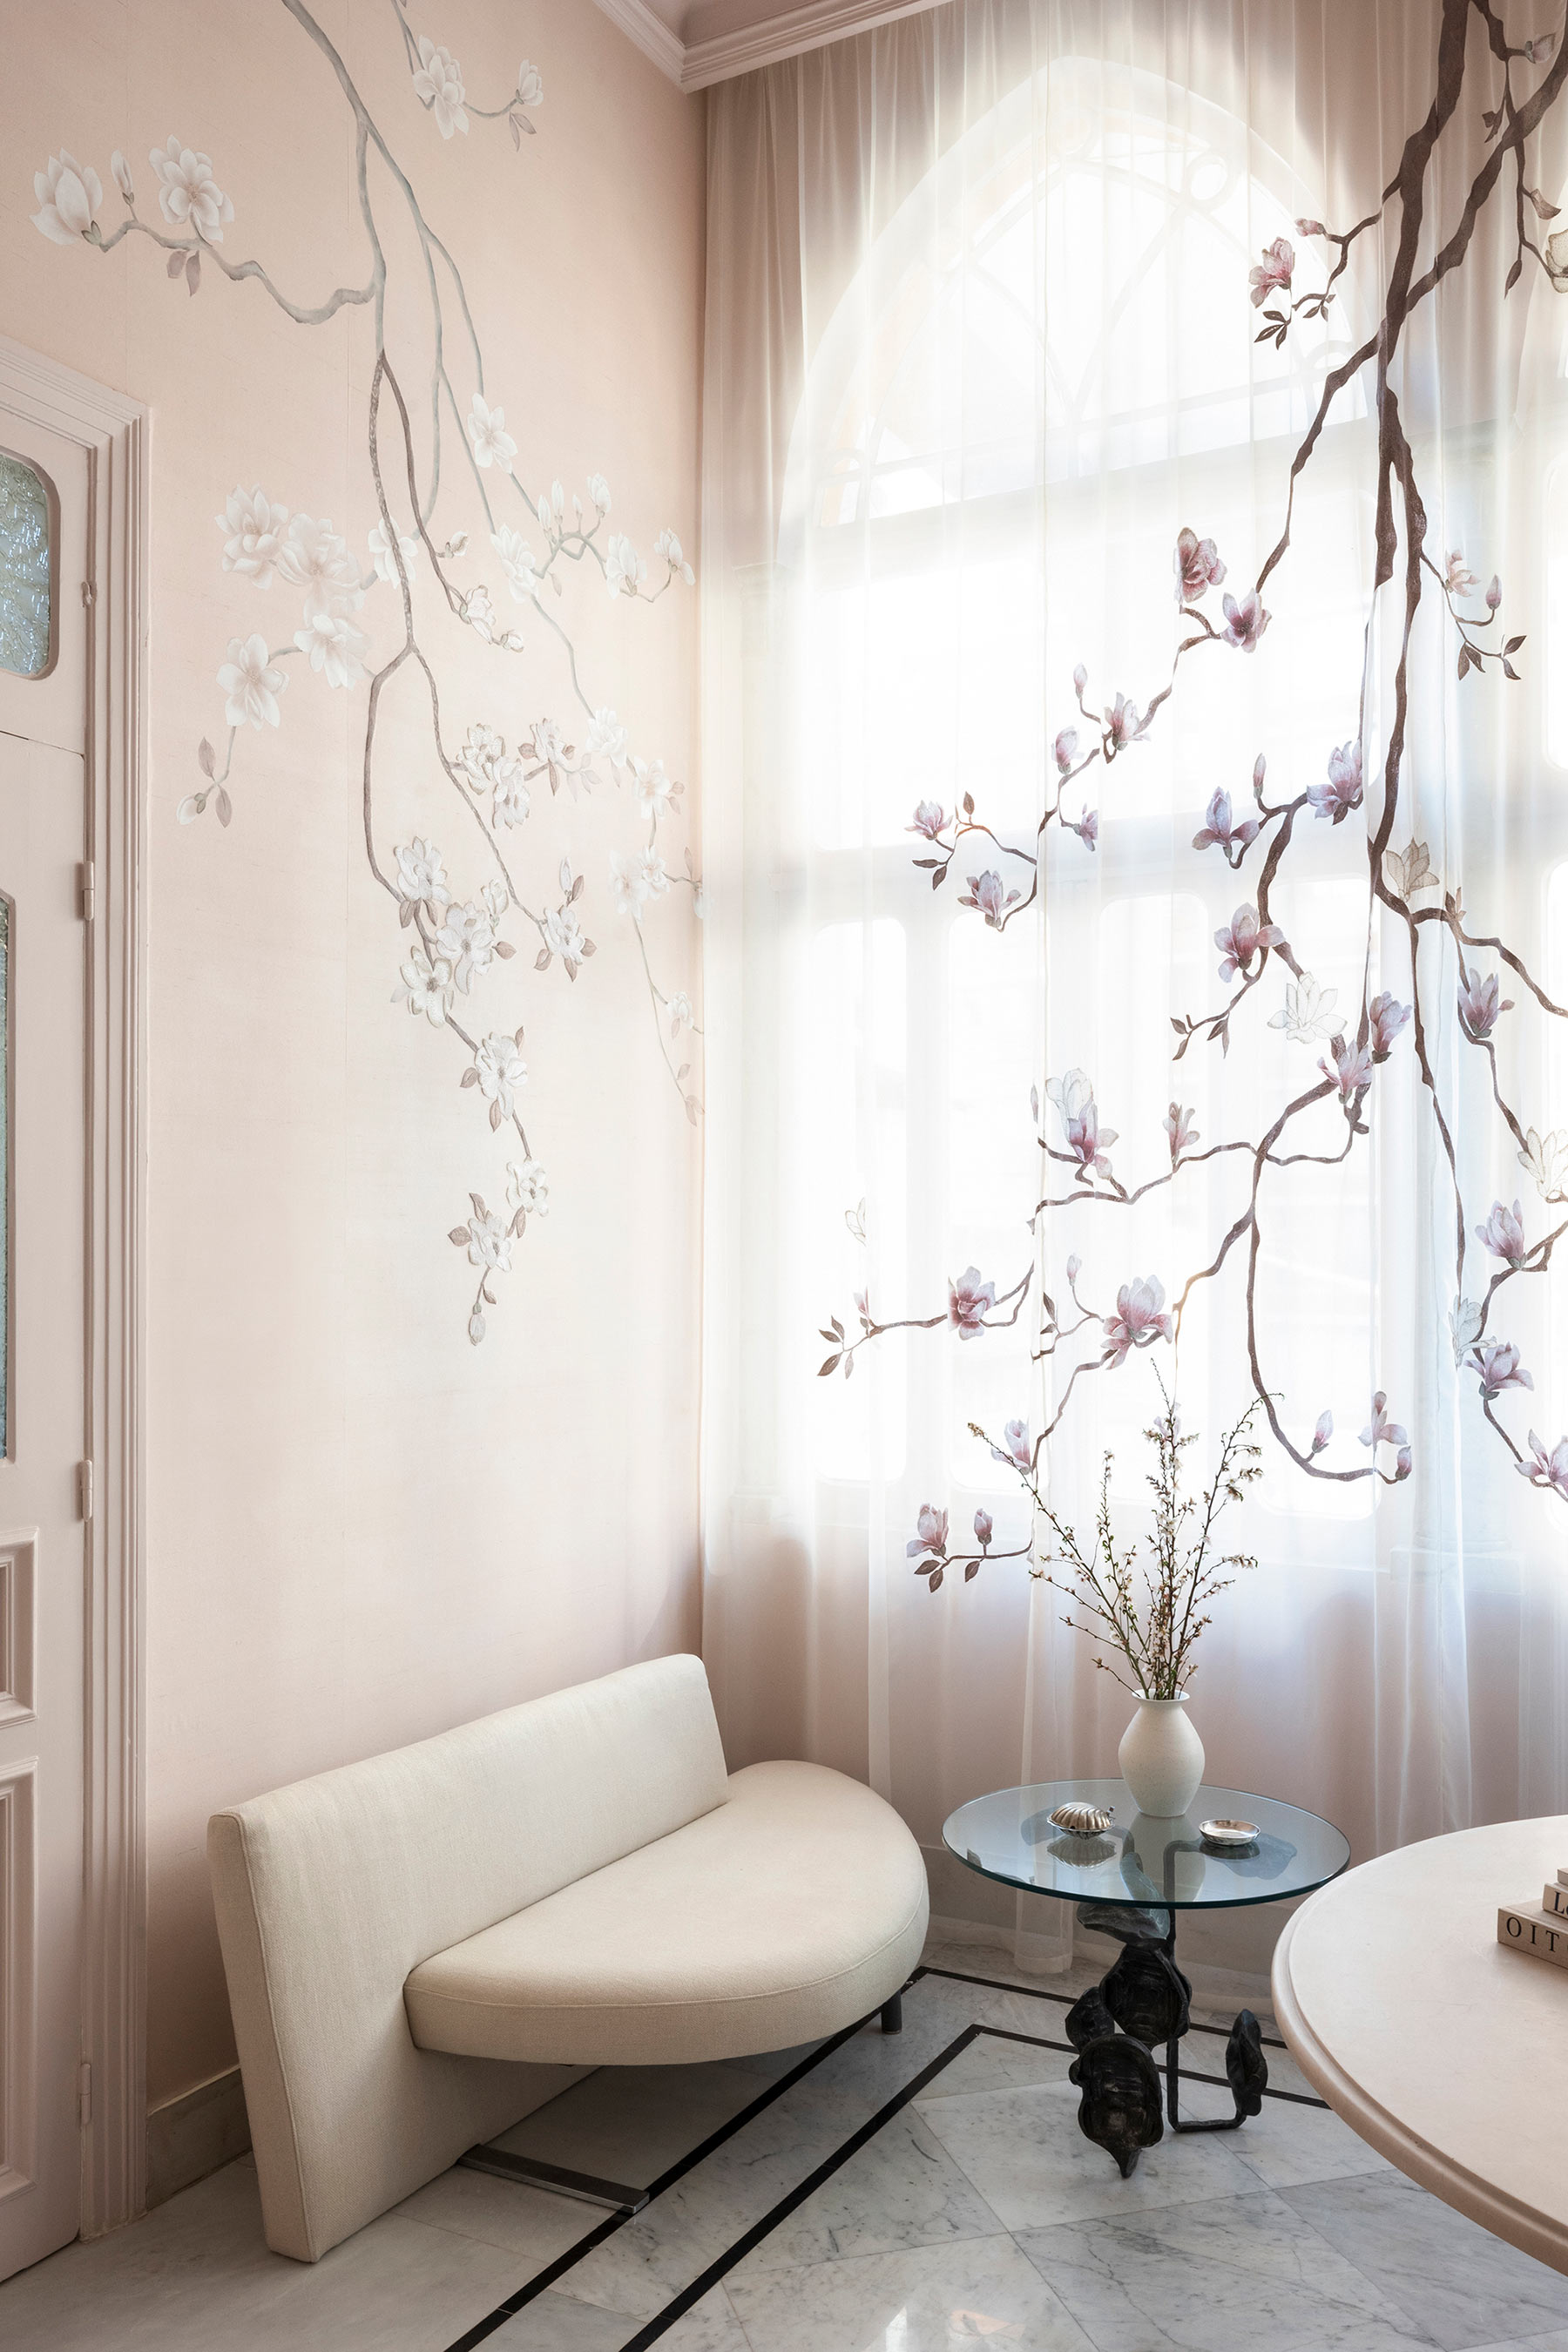 'Magnolia Canopy' in Original design colours on Rose Water metallic slub silk with hand embroidery